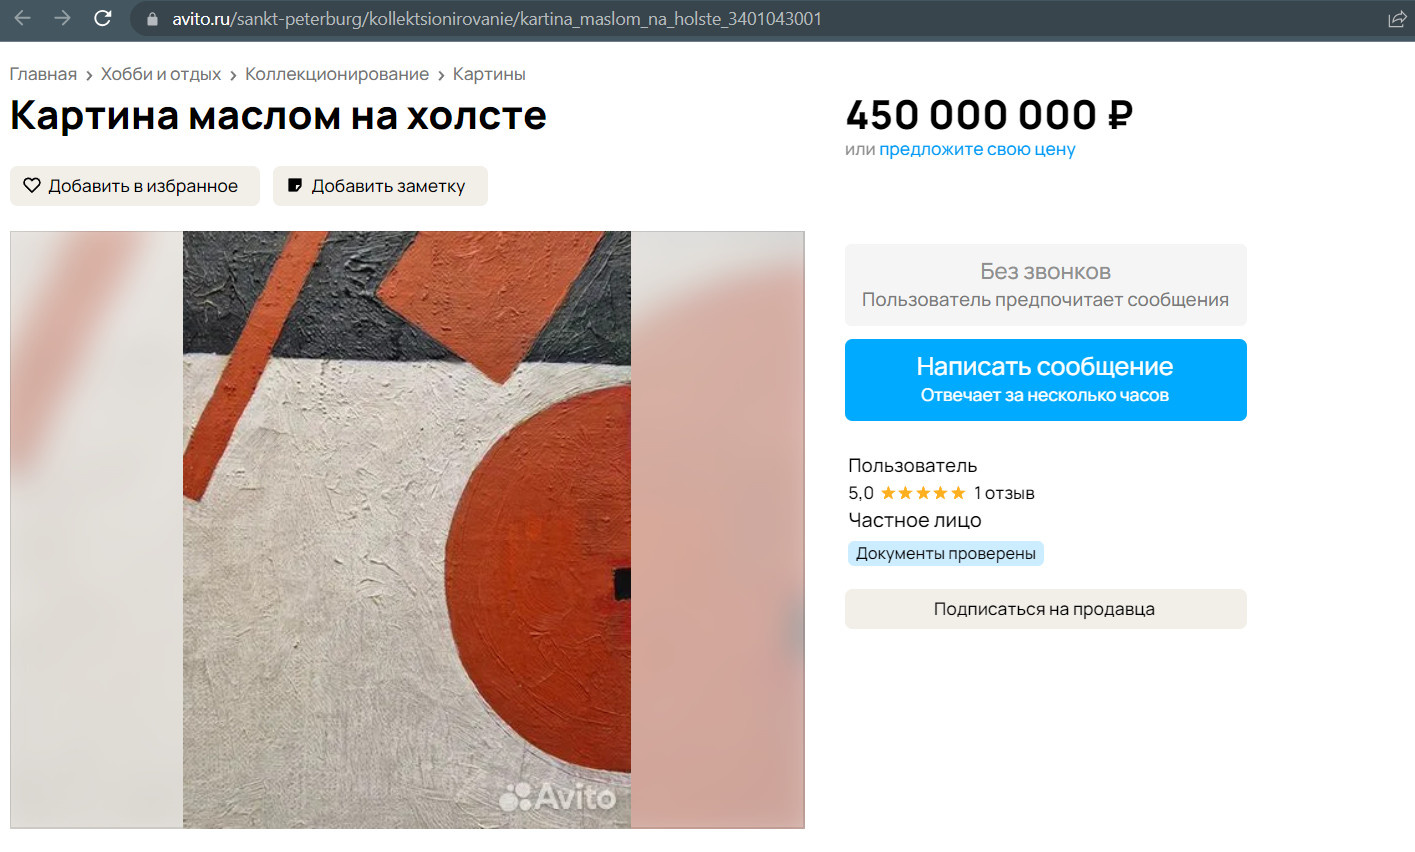 Состояние б/у. Картину Малевича продают на «Авито» за сотни миллионов